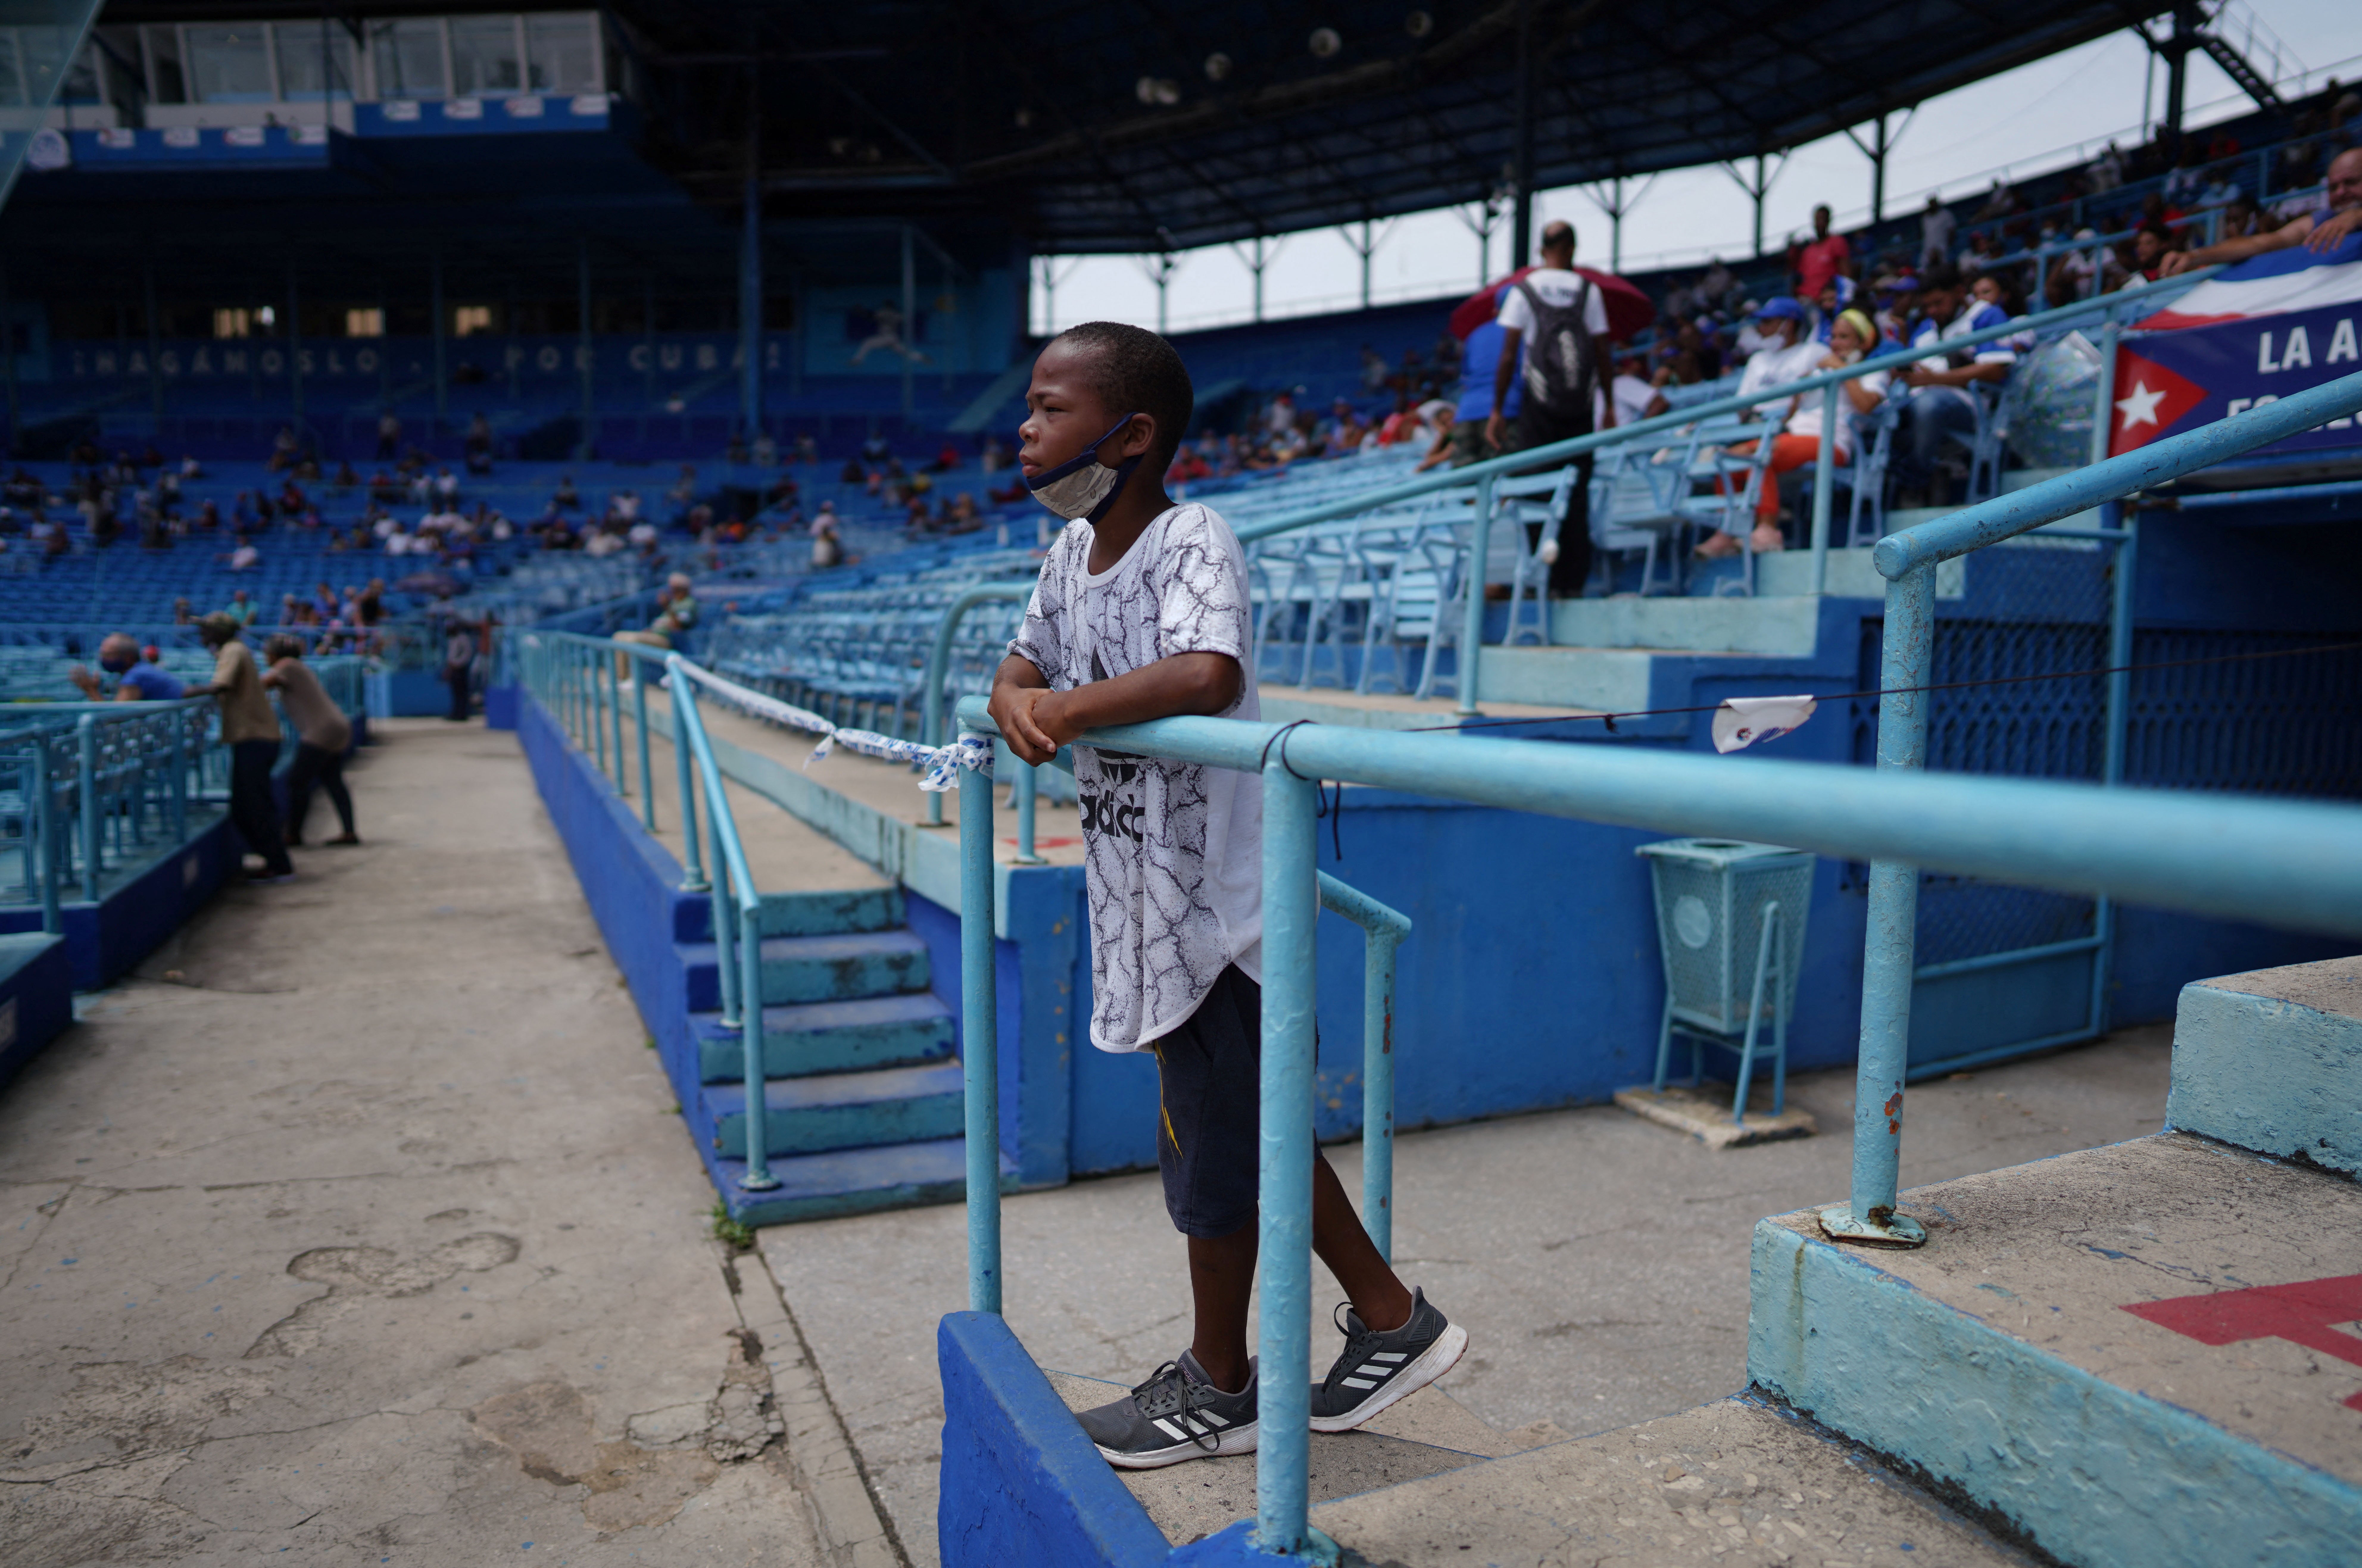 MLB-Cuba crisis is bigger than baseball - The Daily Illini